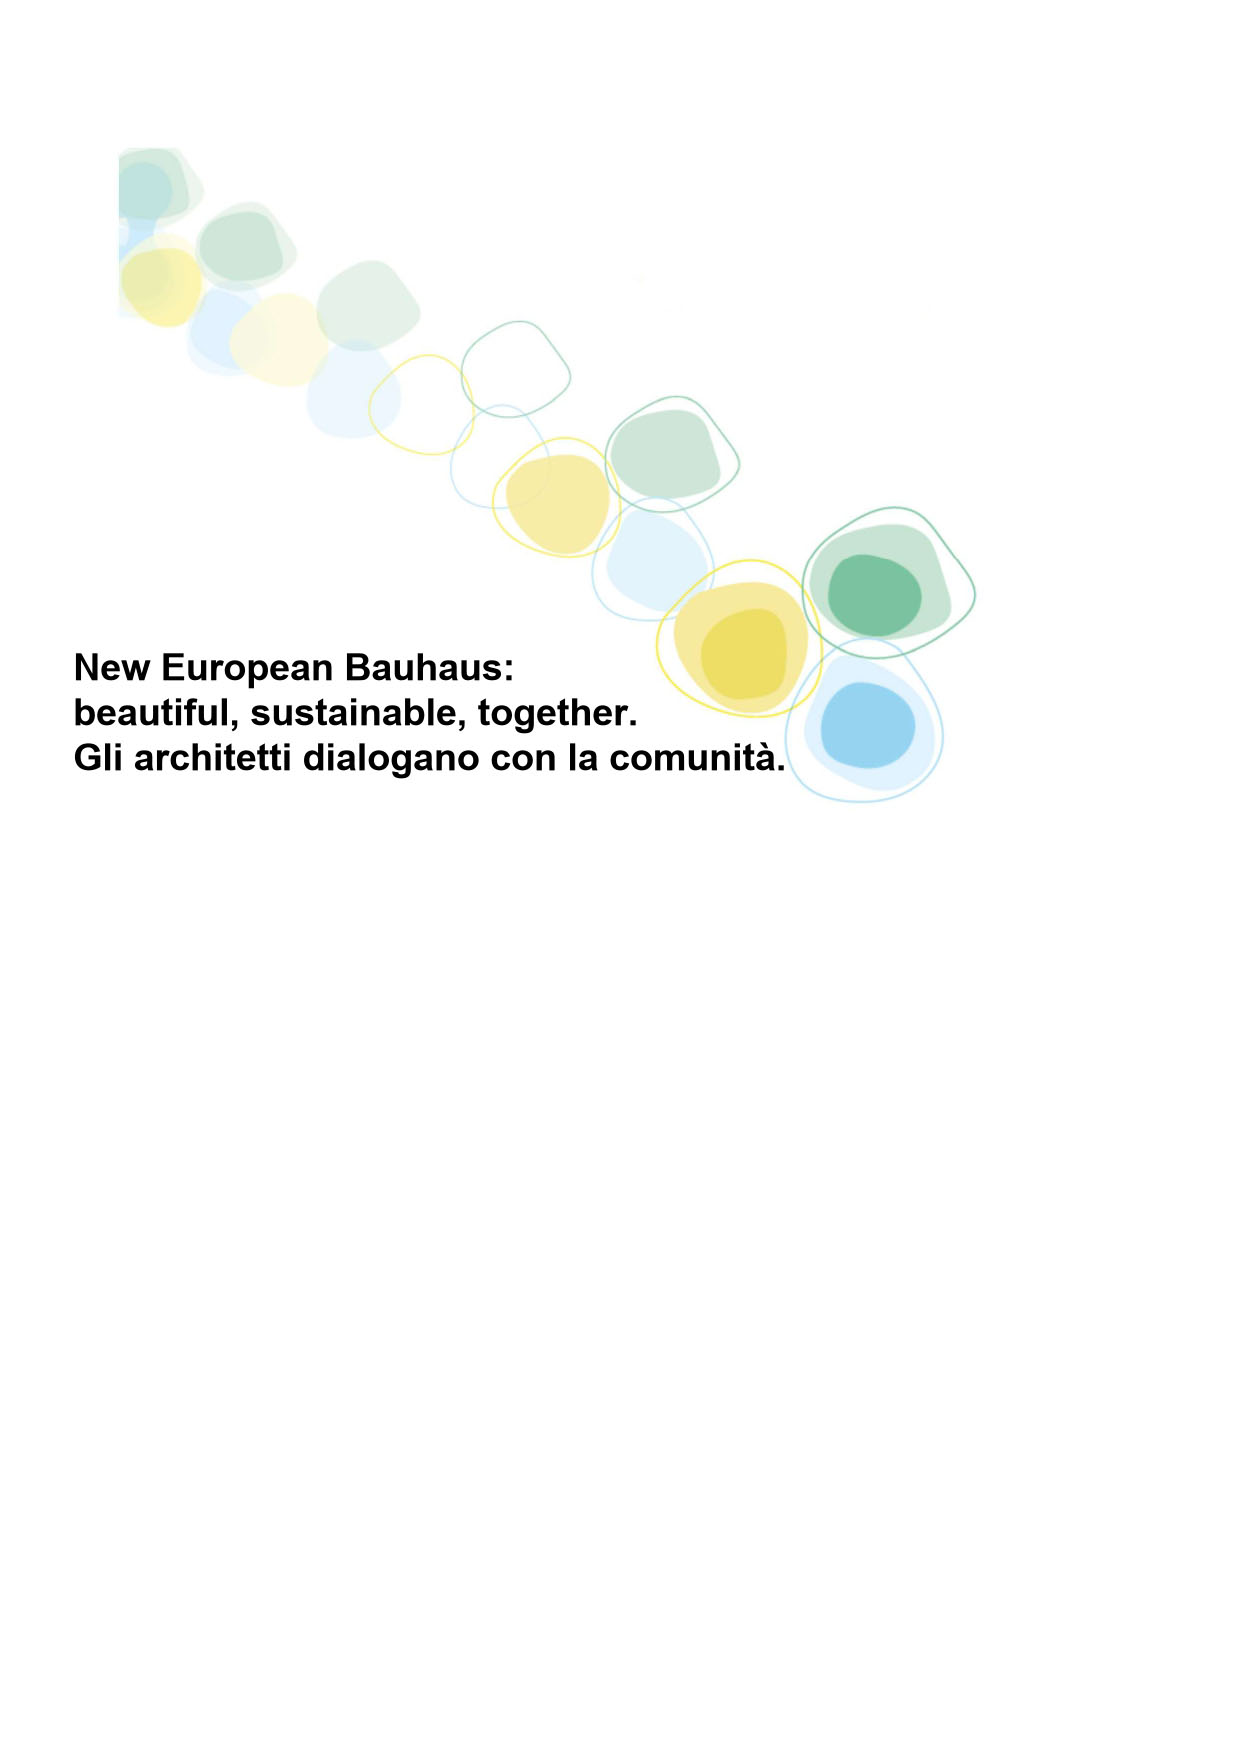 Logo di New European Bauhaus.